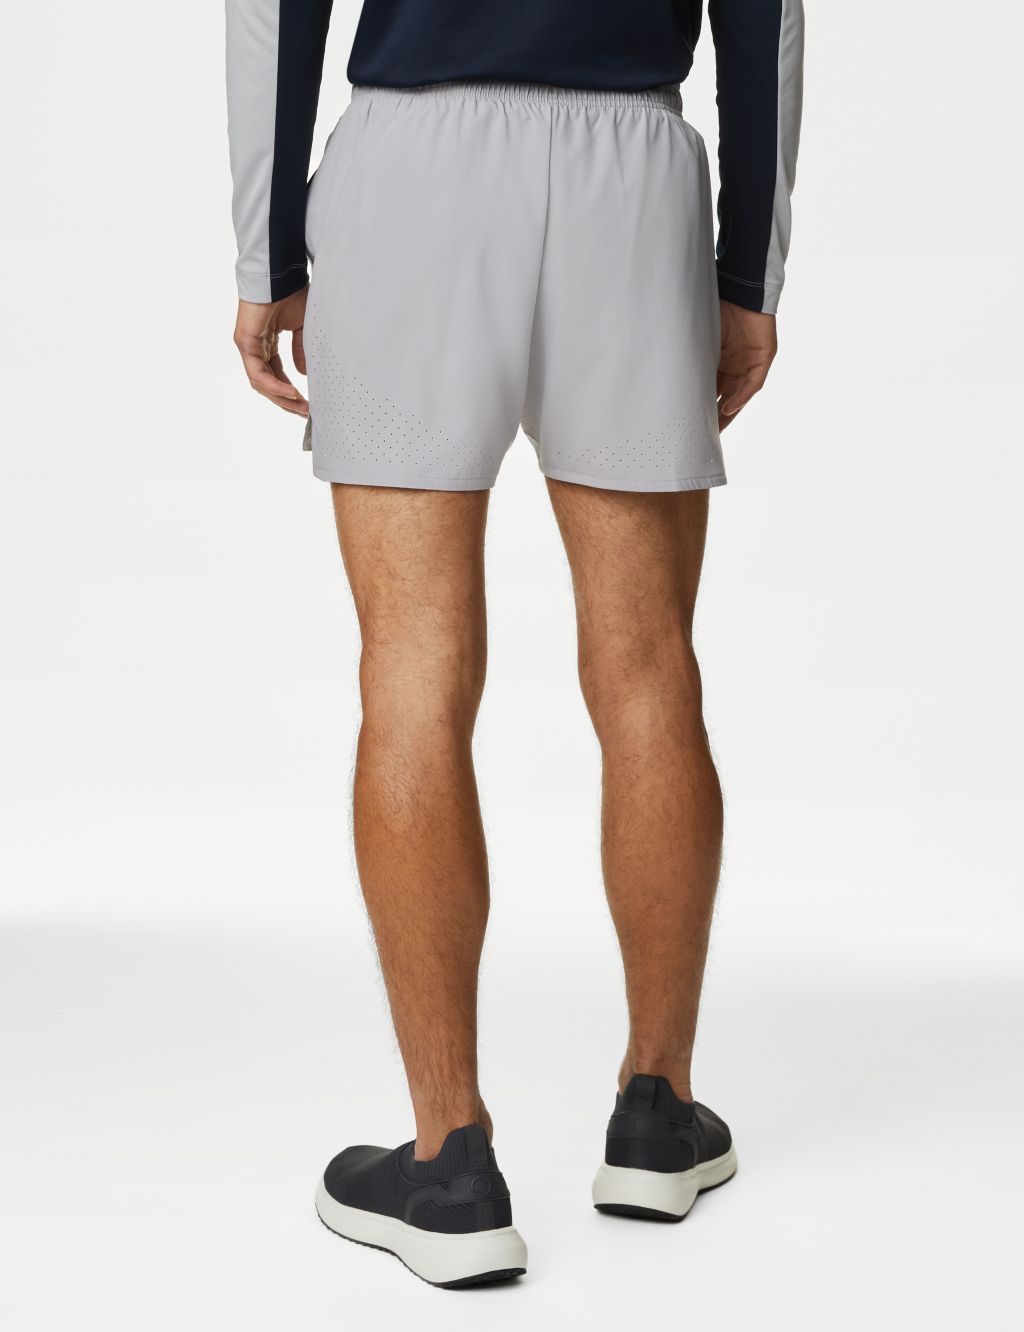 Zip Pocket Running Shorts image 5